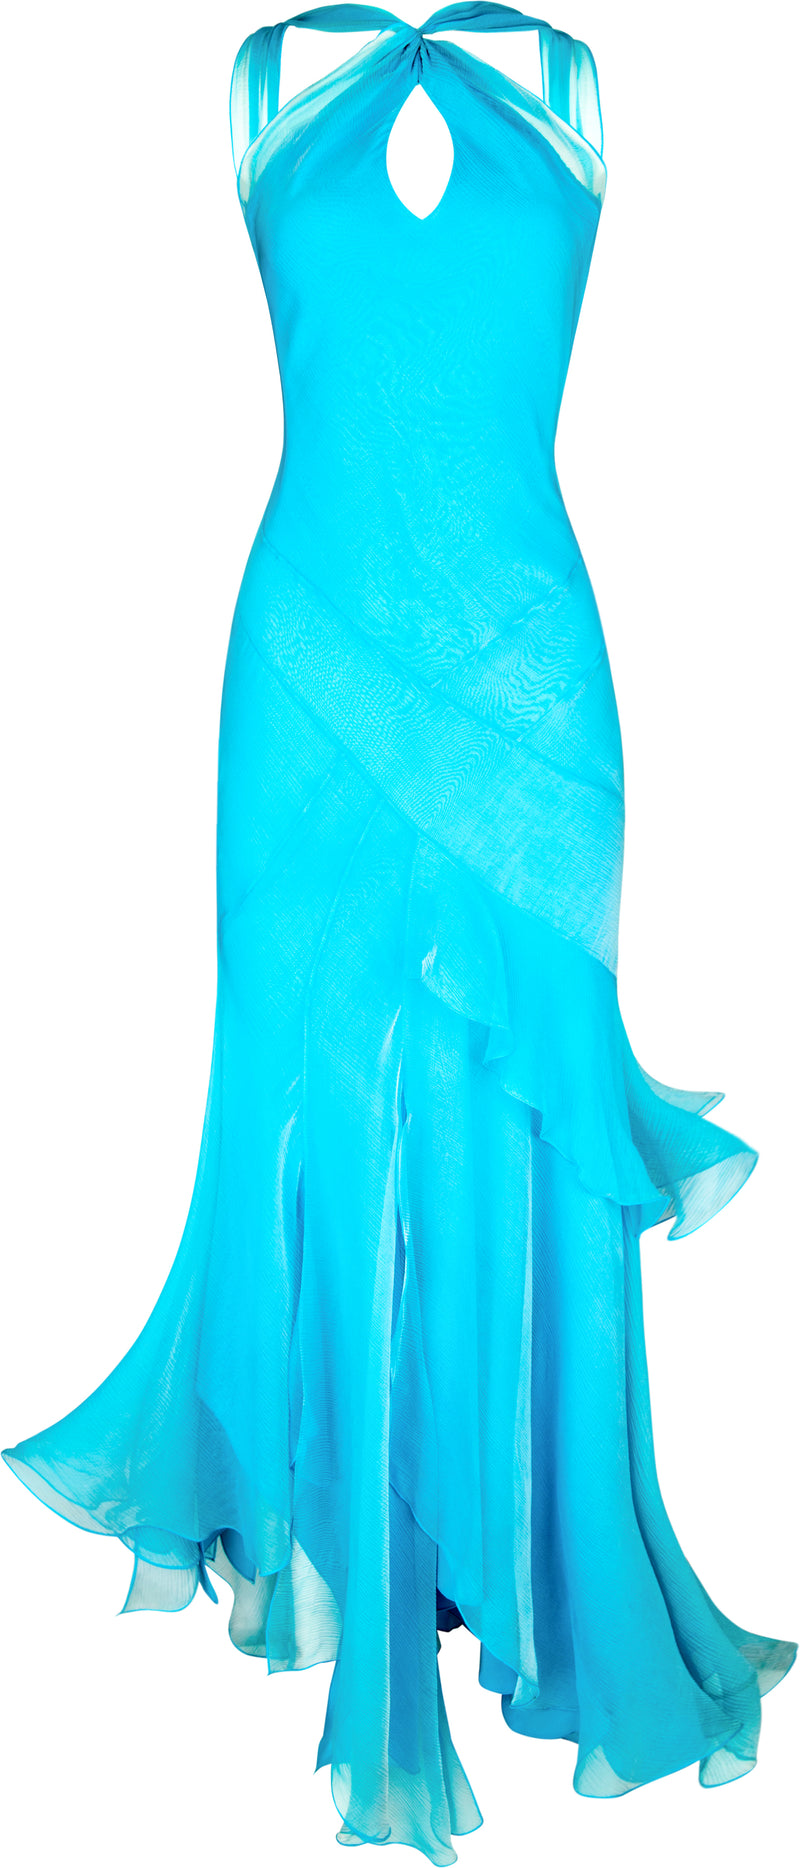 Christian Dior Spring 2005 Blue Silk Chiffon Ruffle Gown